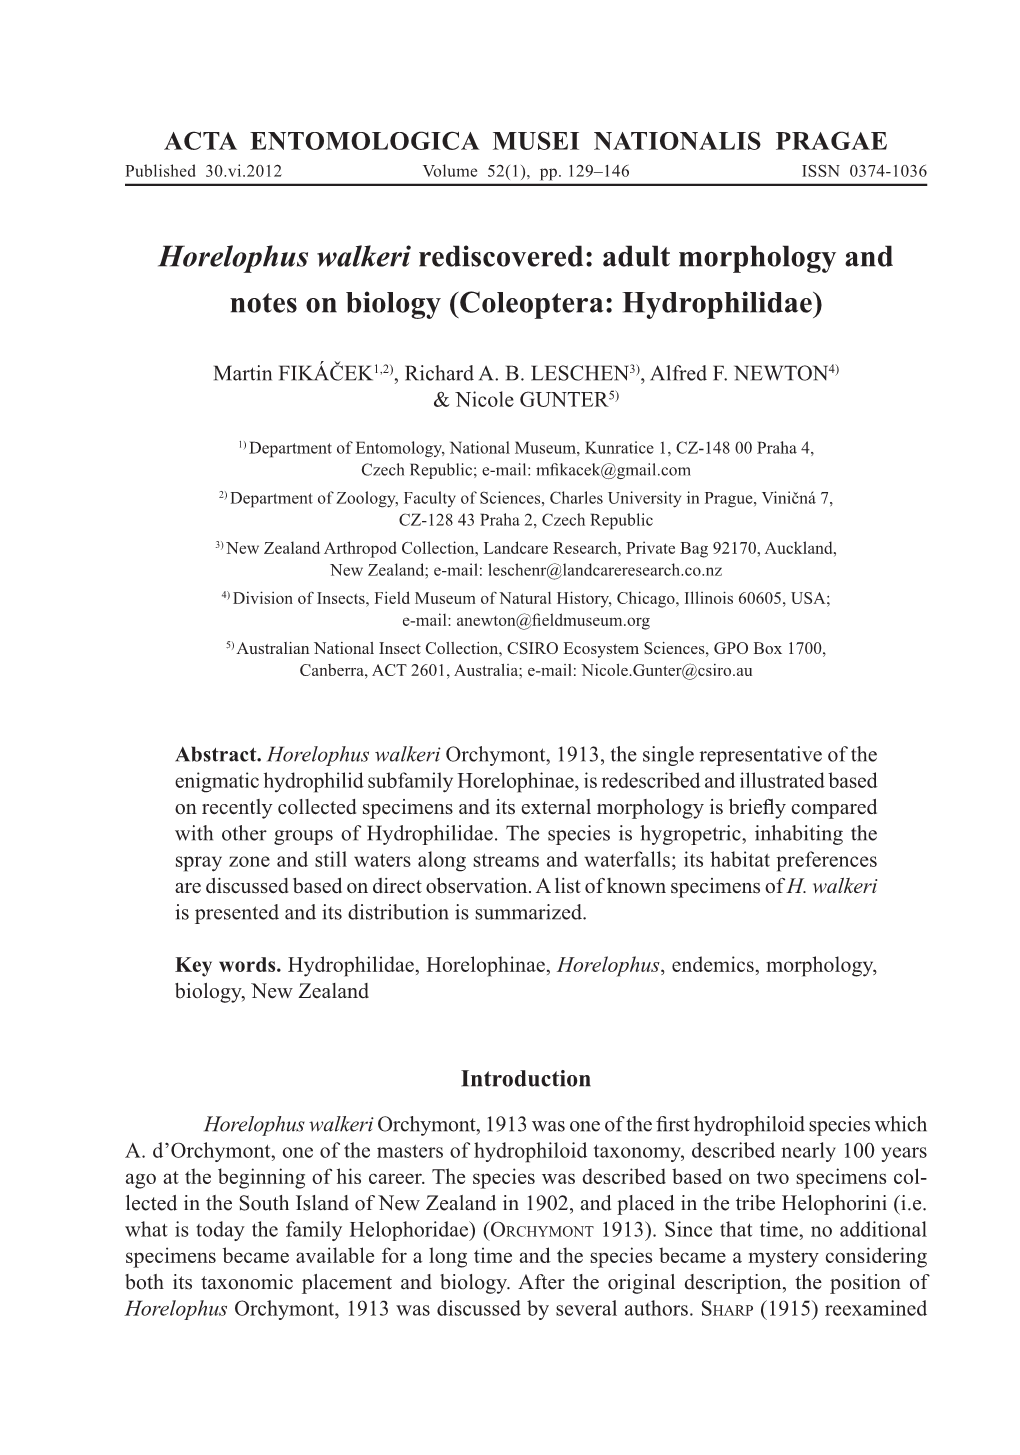 Horelophus Walkeri Rediscovered: Adult Morphology and Notes on Biology (Coleoptera: Hydrophilidae)